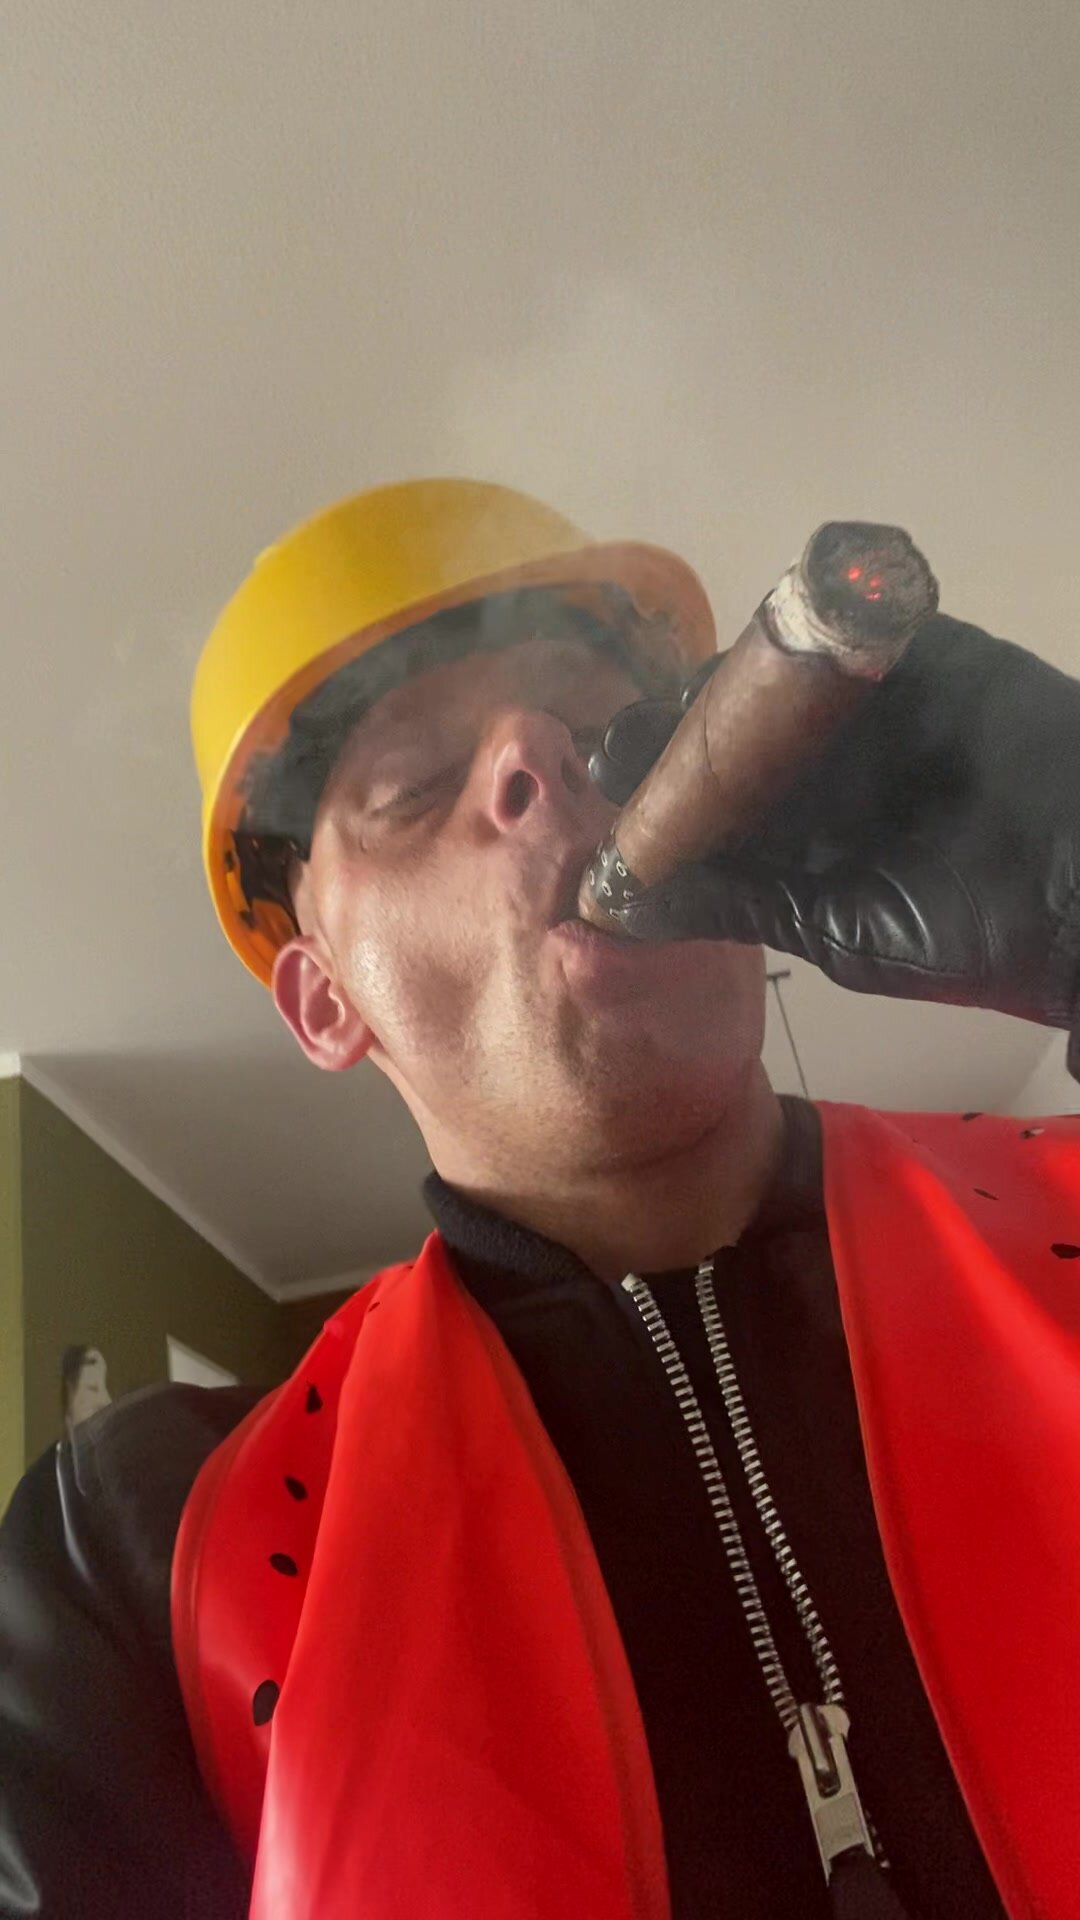 Hi Viz Worker Smoking a Cigar